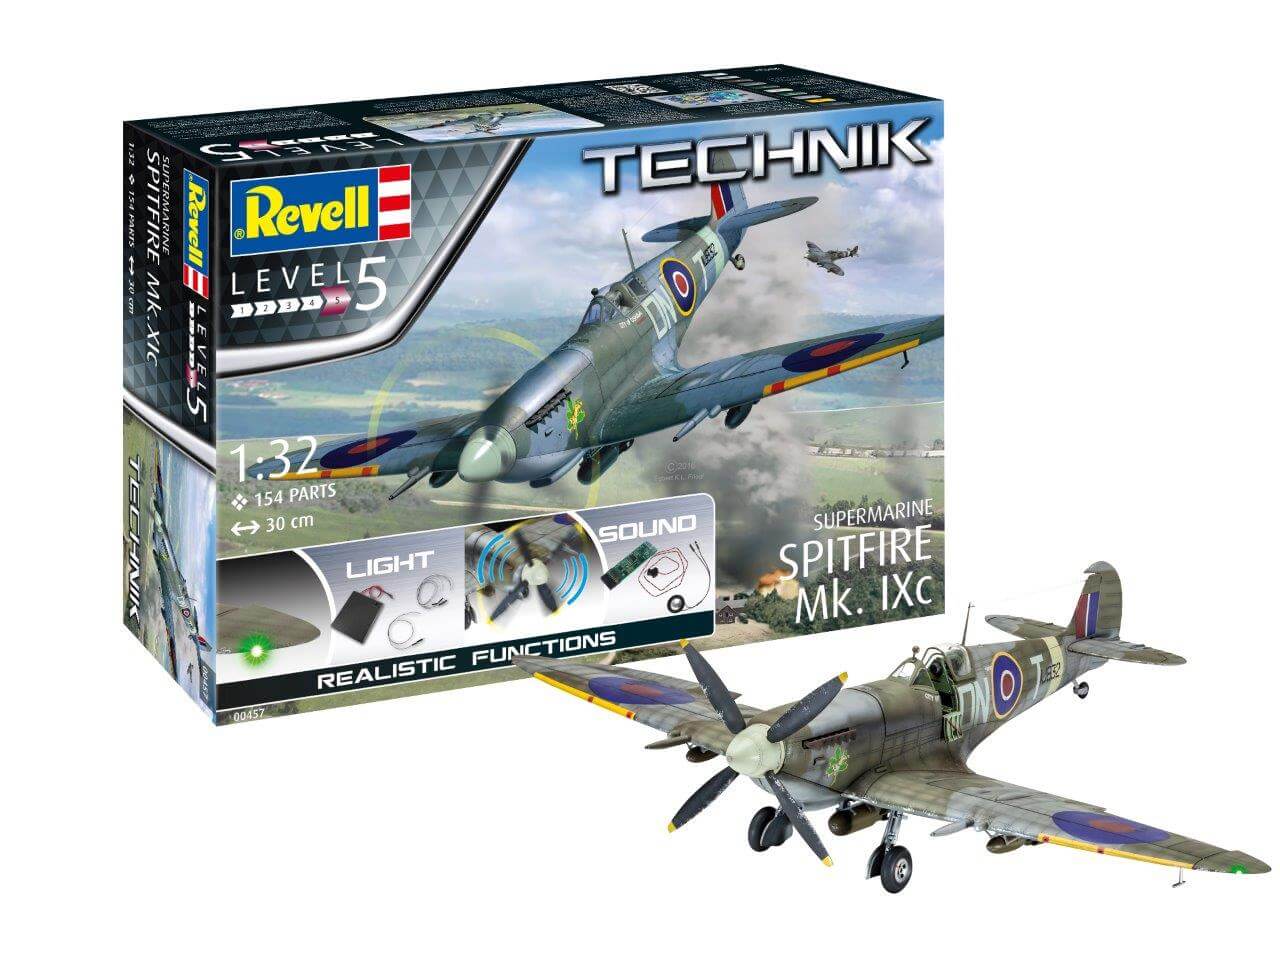 Revell 00457 Supermarine Spitfire MK.Ixc Tecknik 1:32 Plane Model Kit